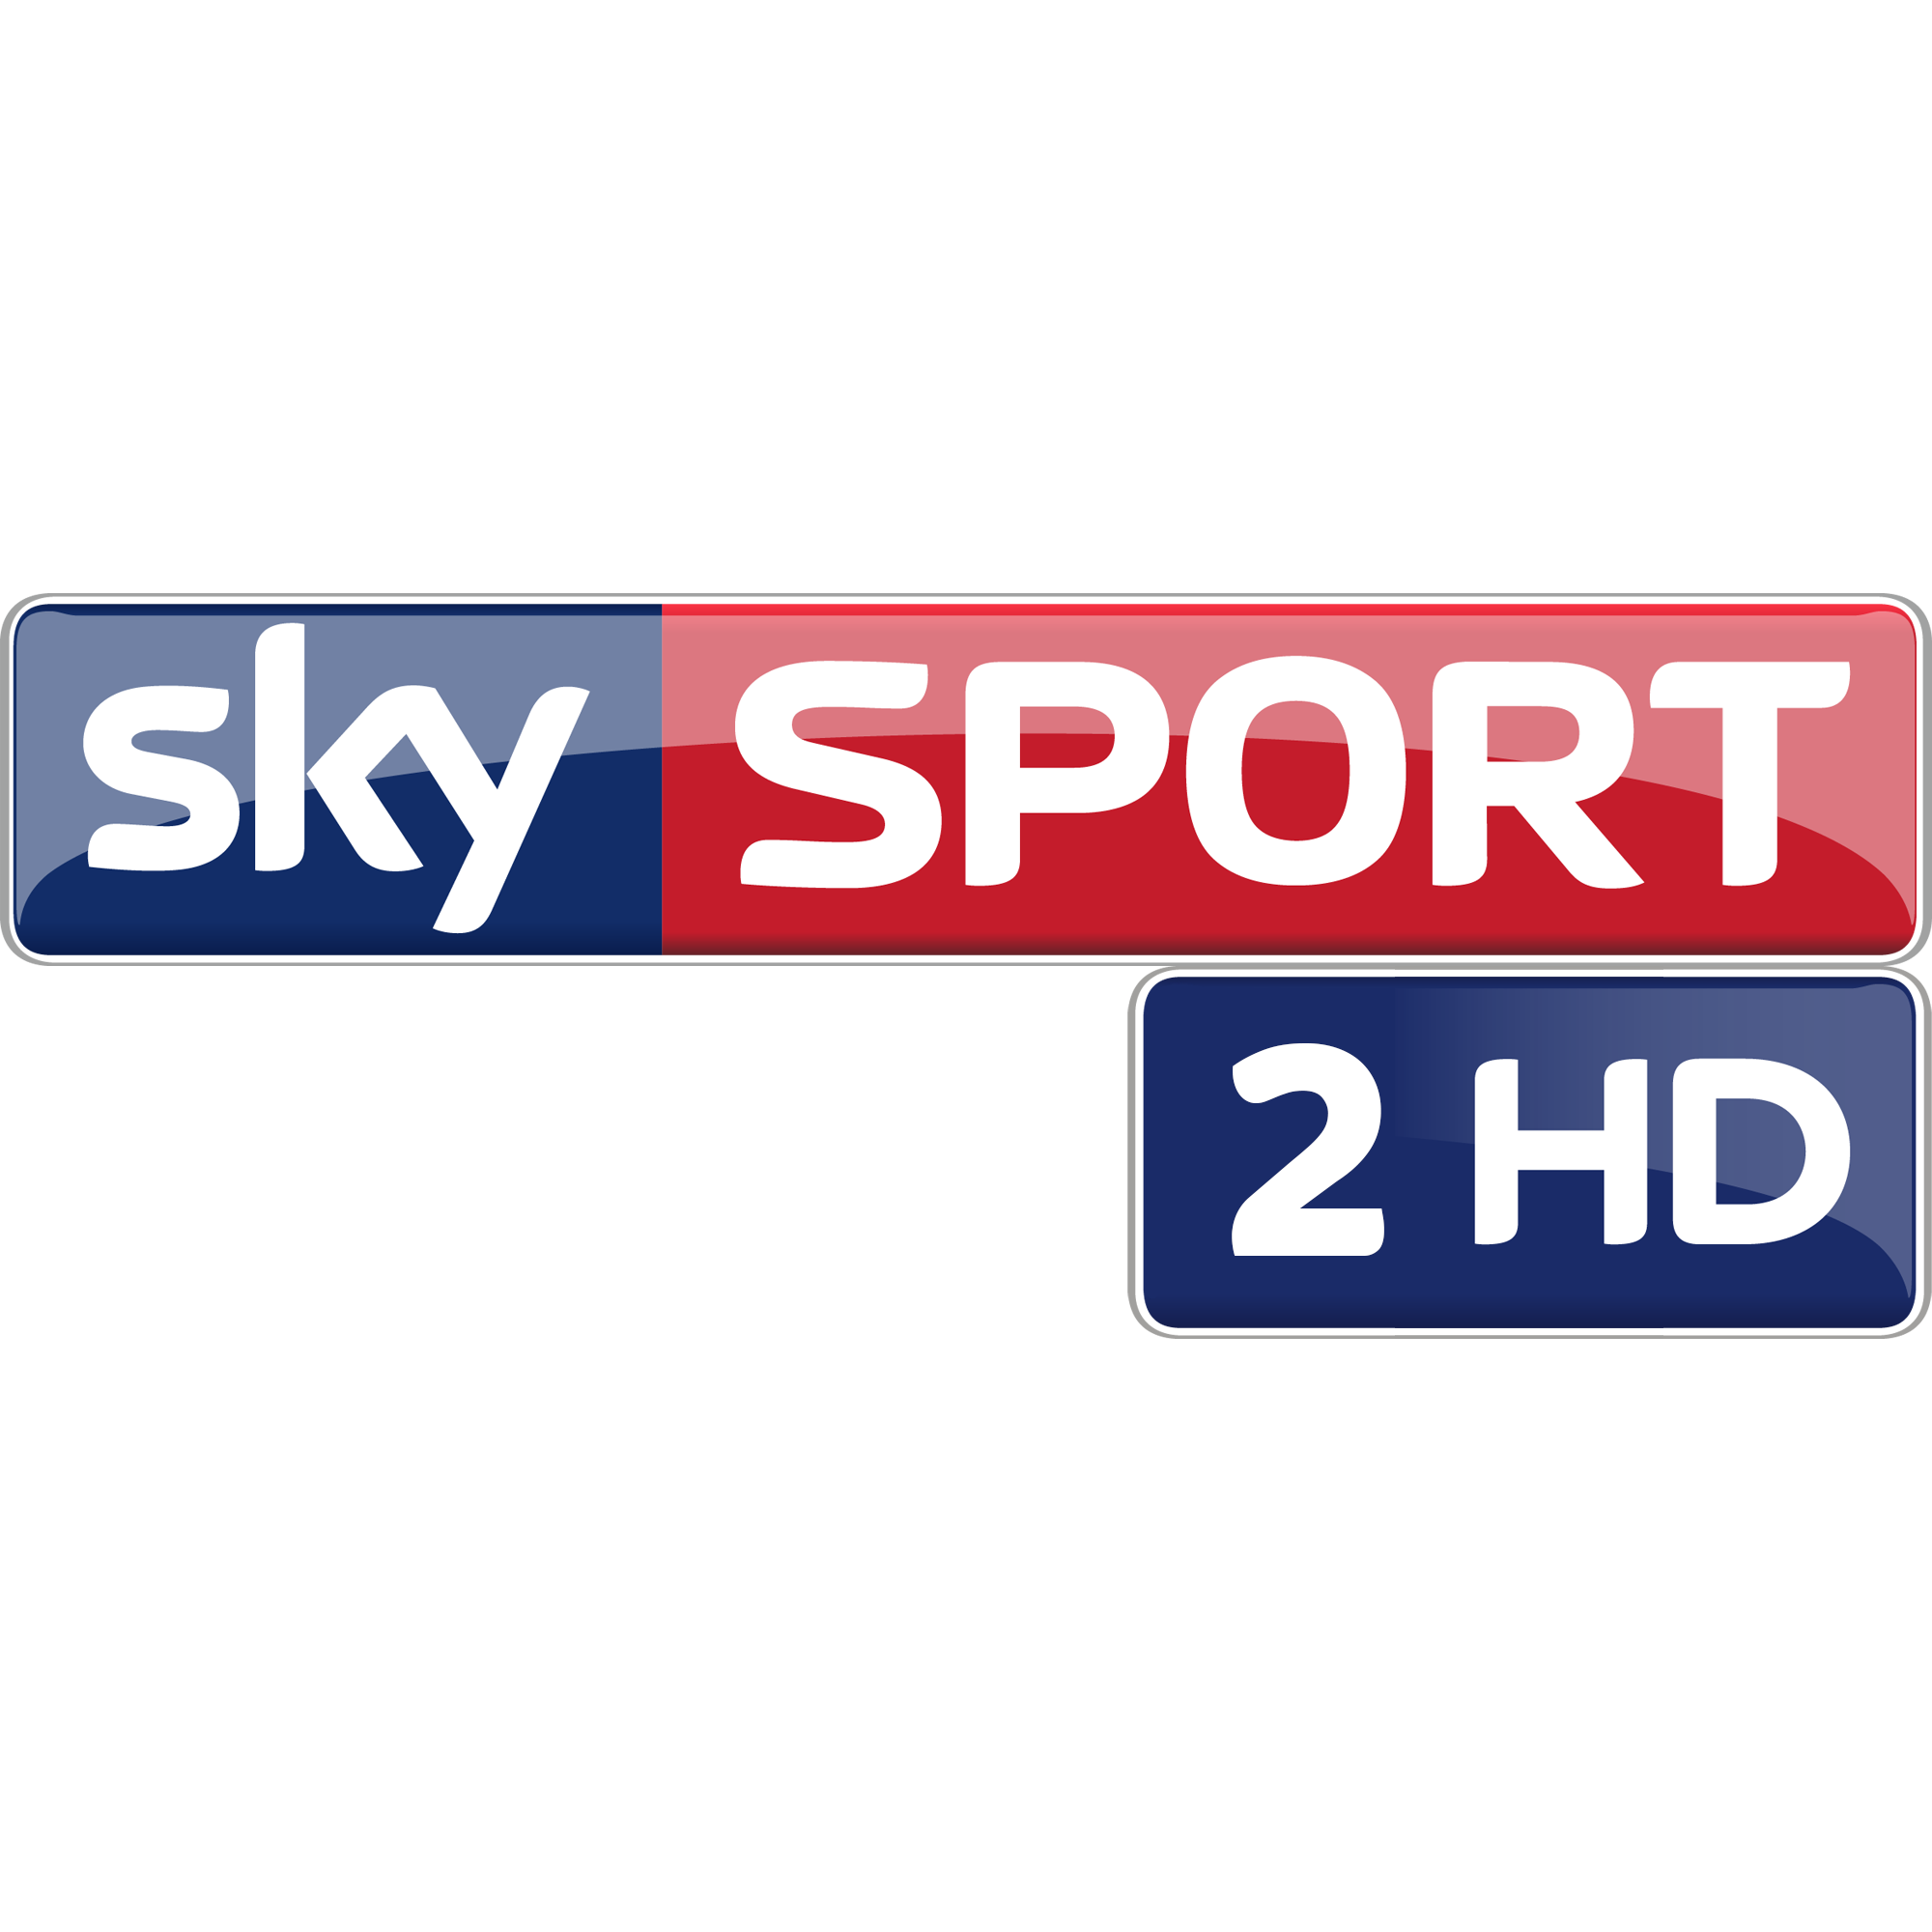 Sky Sport. Sky Sport 1. Sky Sports logo. IPTV пакет. Sky sport live streaming